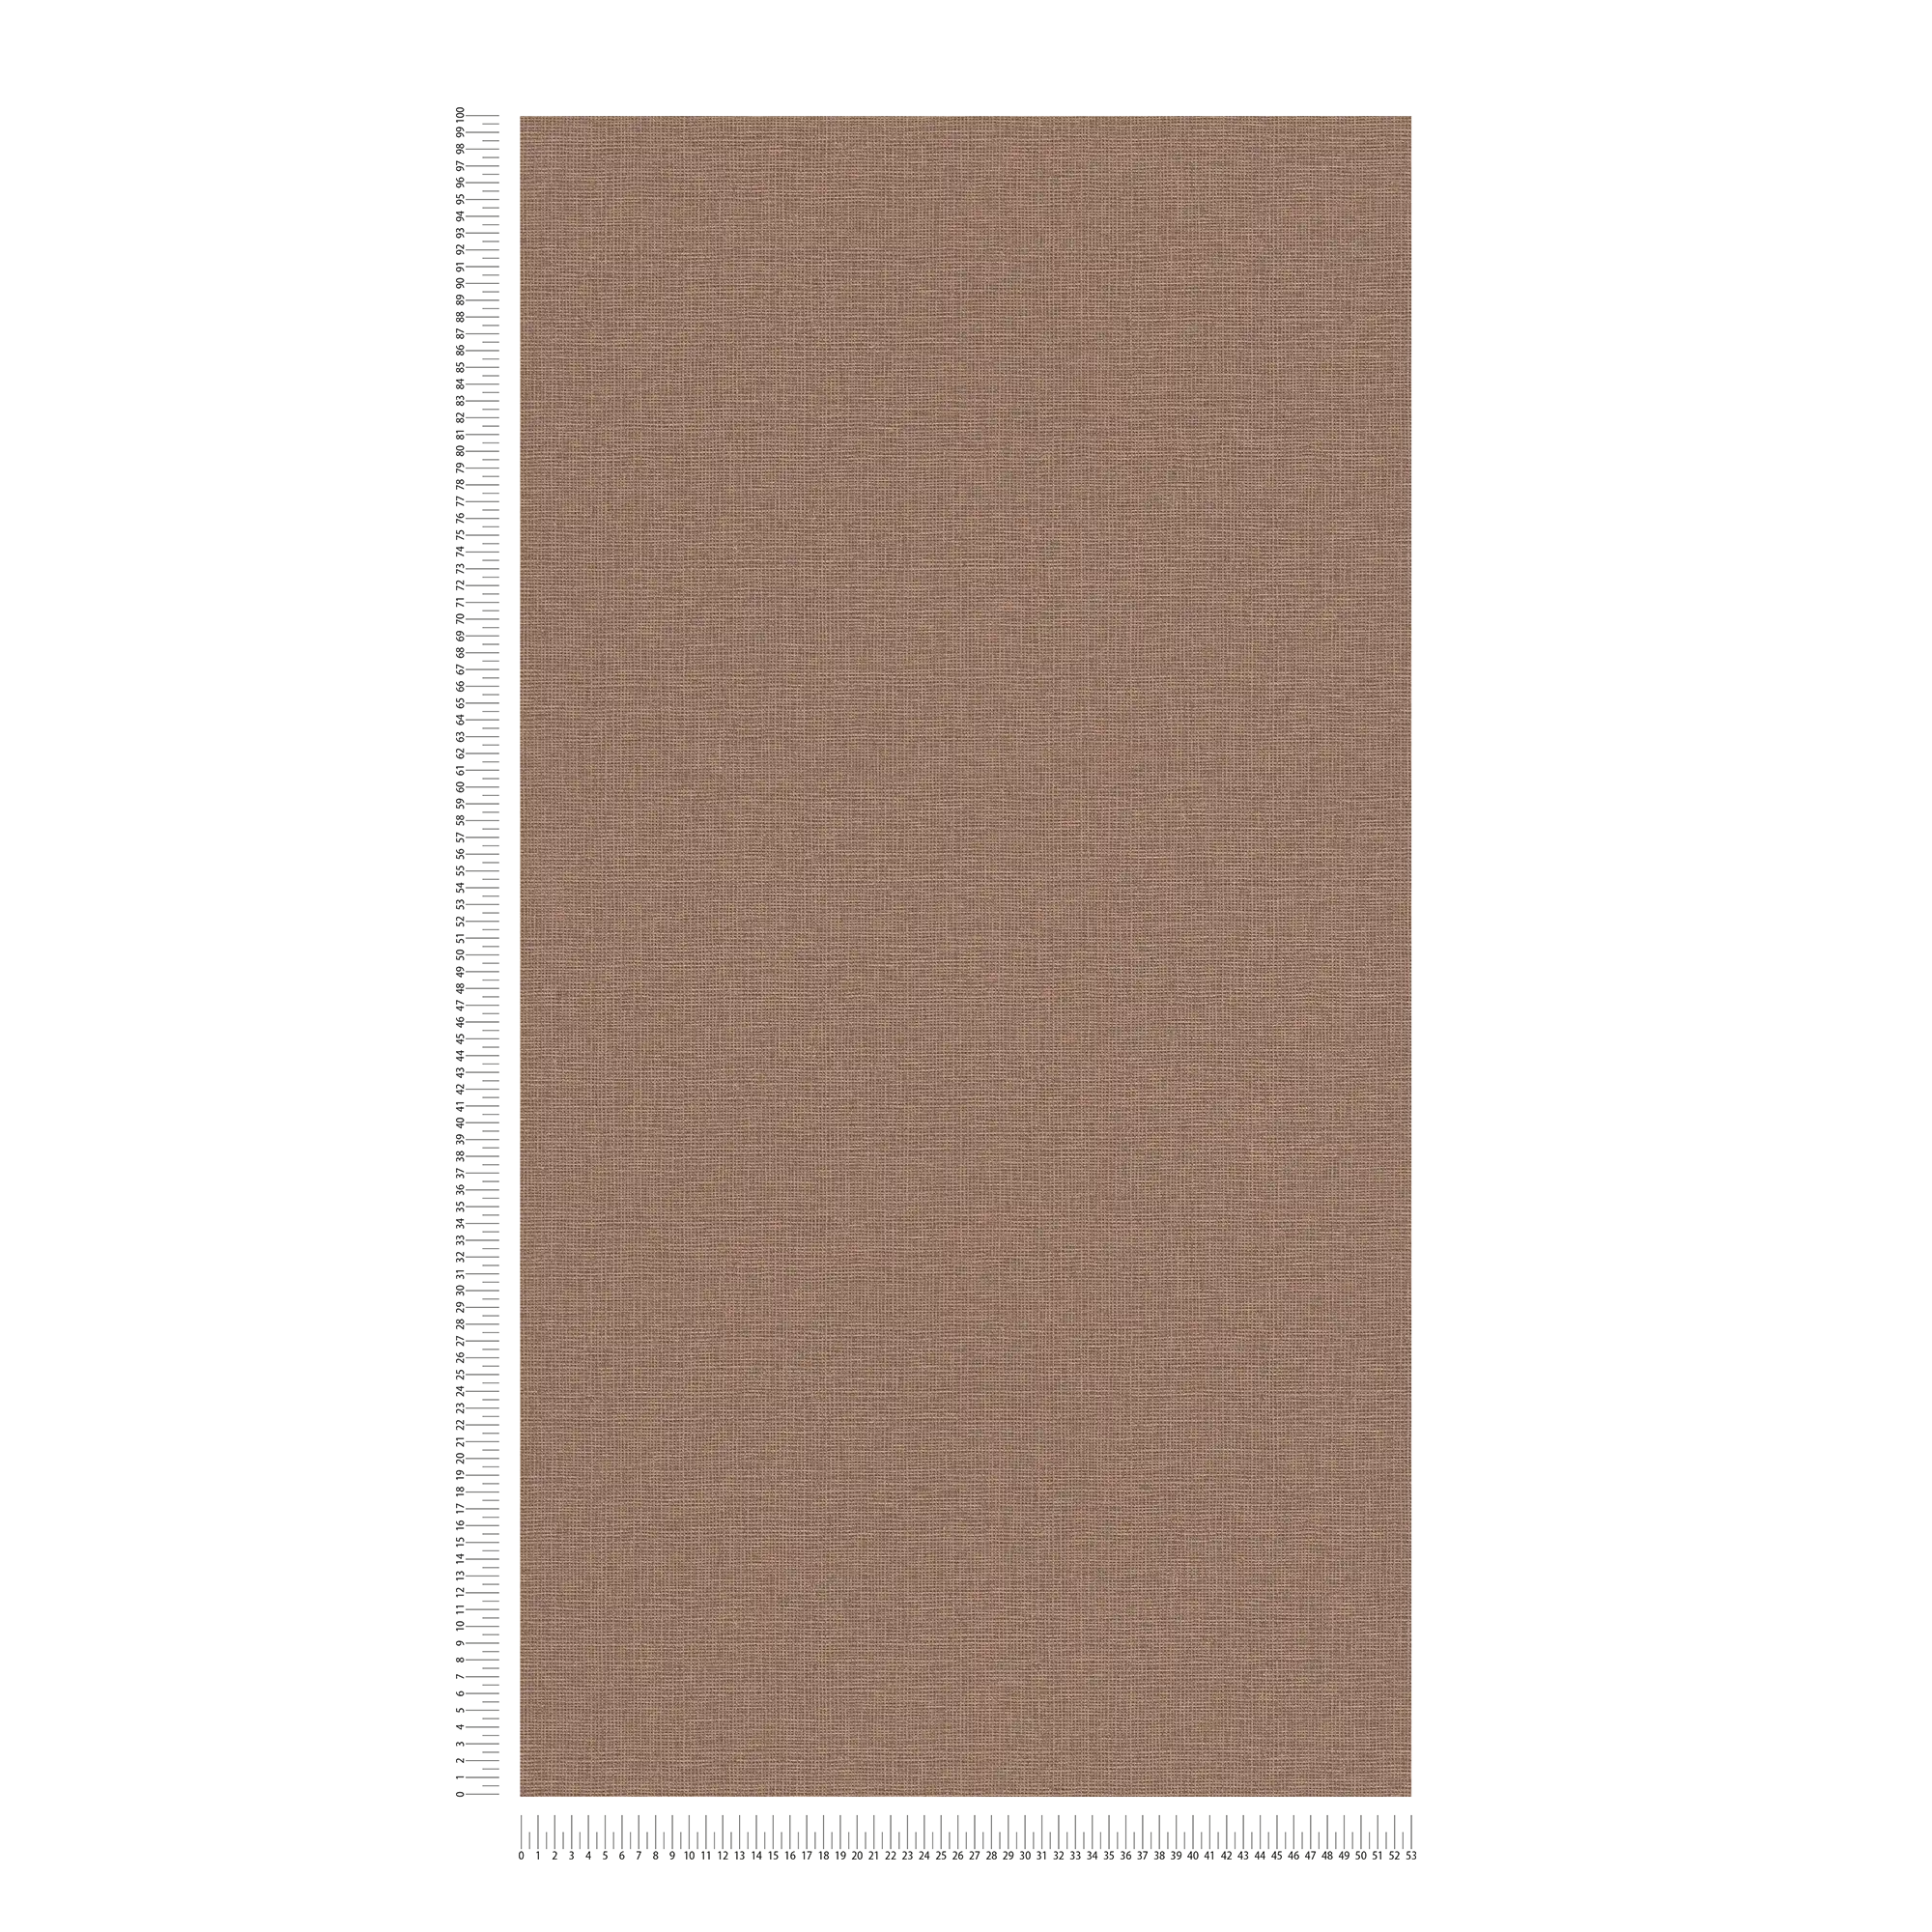             Non-woven wallpaper plain with linen texture - brown
        